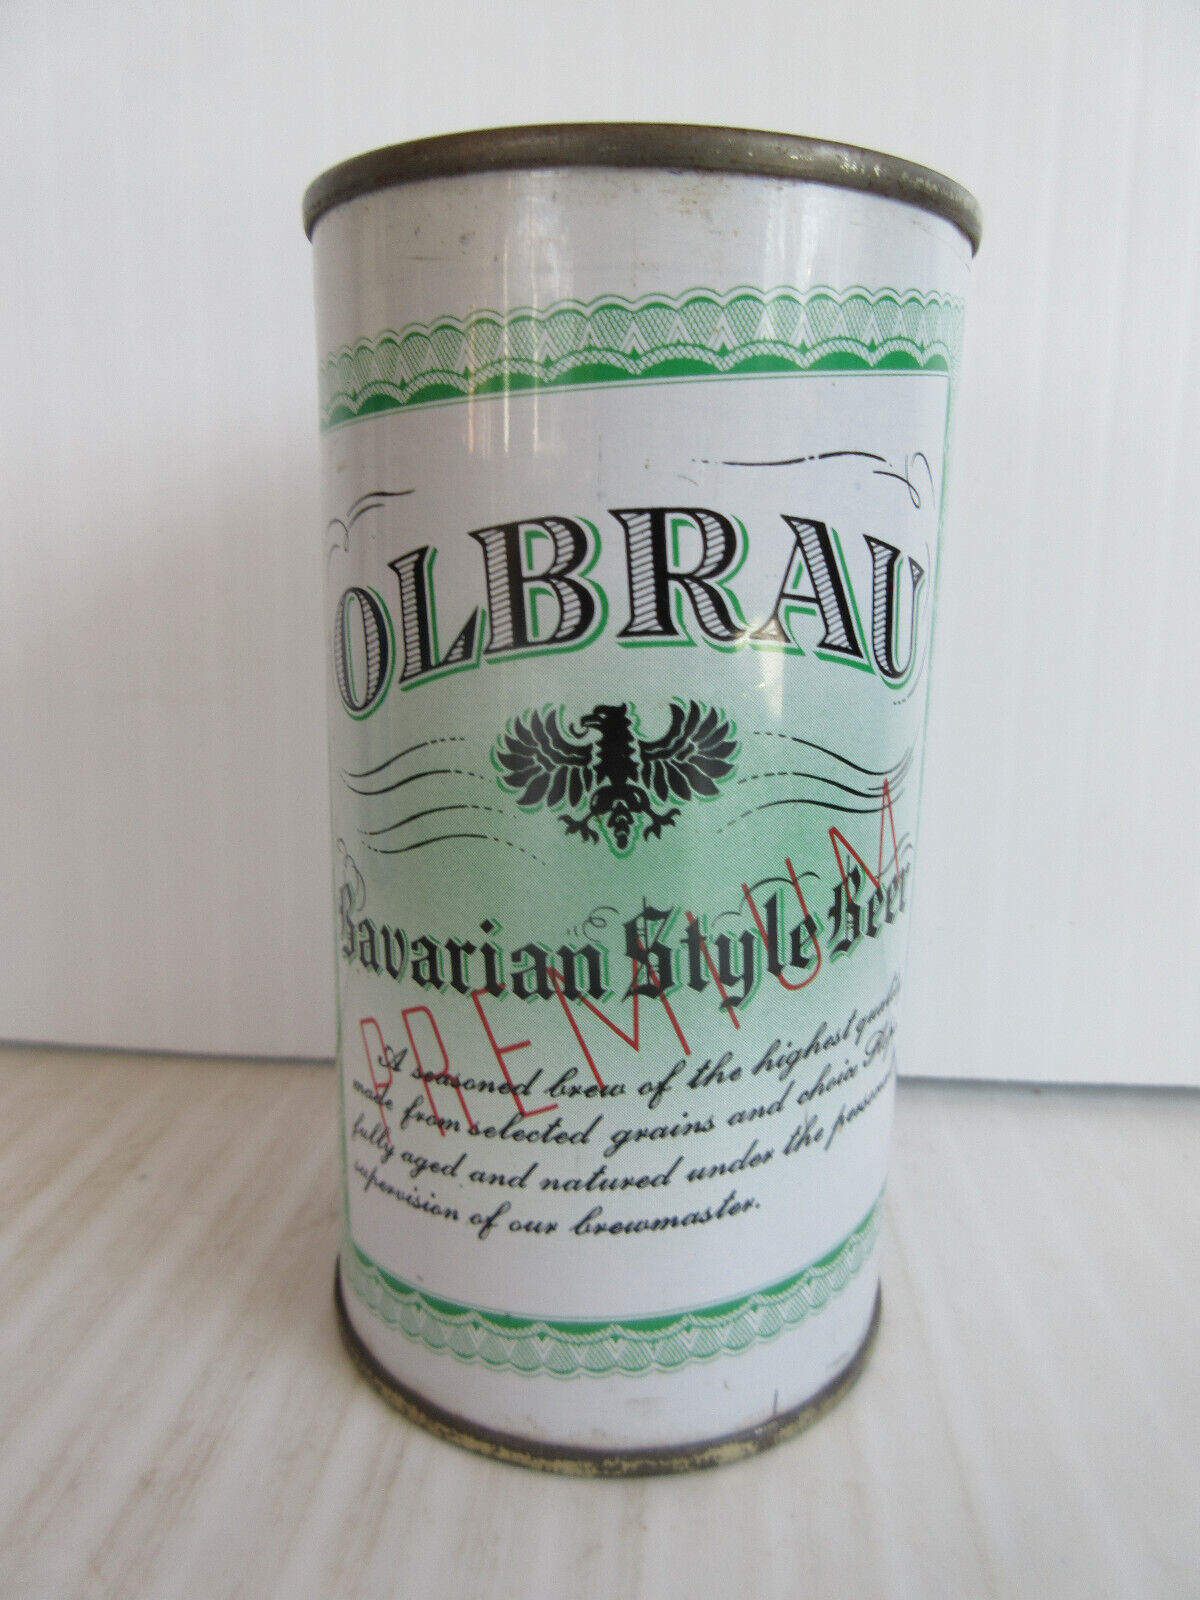 OLBRAU Bavarian Style, Metropolis Brewery of New Jersey, Trenton, NJ